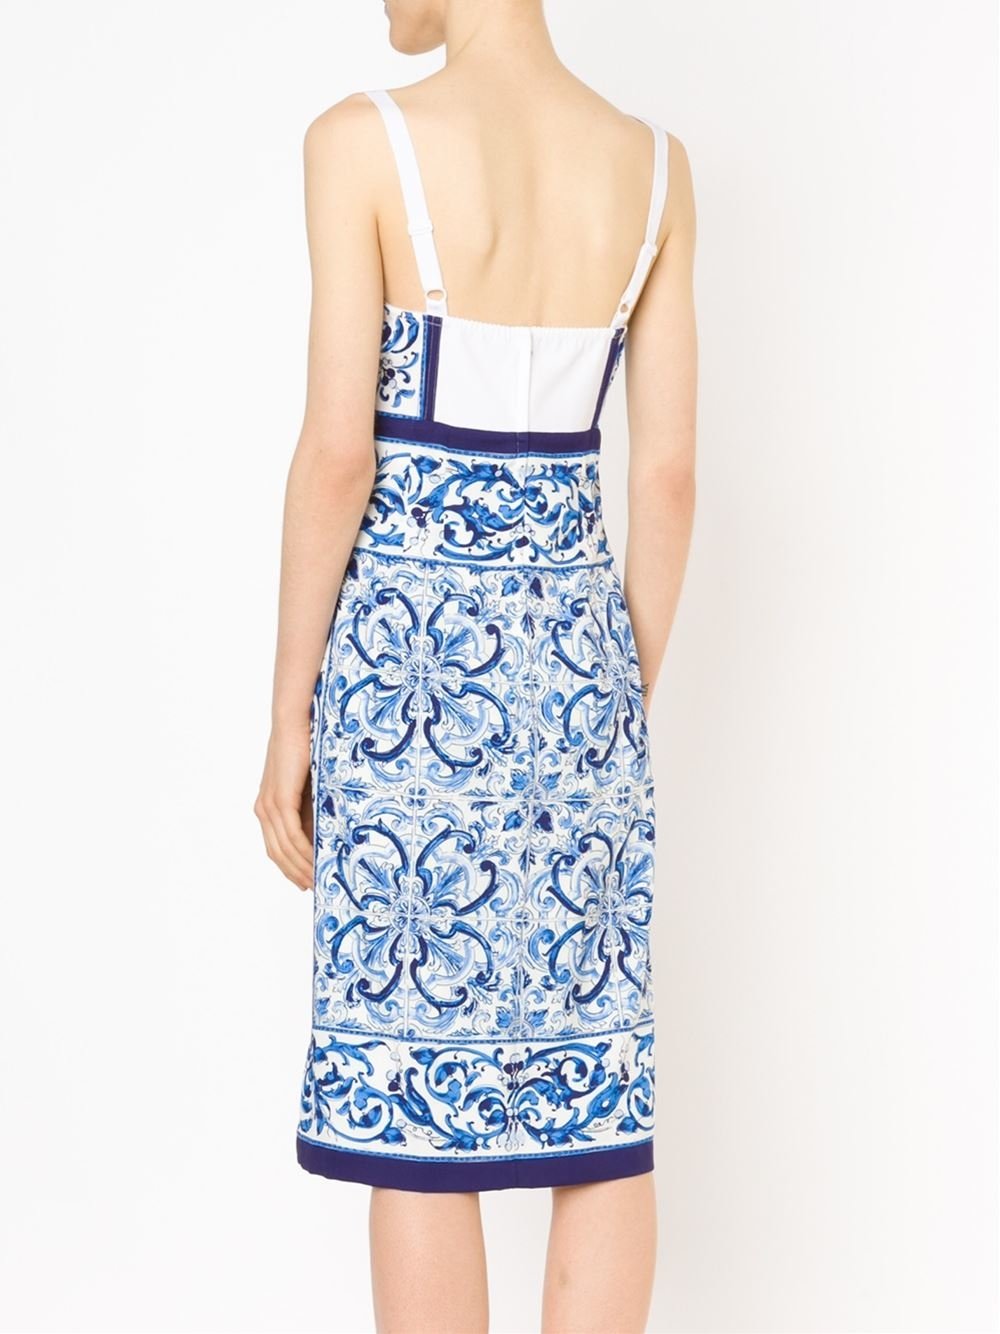 Dolce & Gabbana 'majolica' Dress in Blue - Lyst